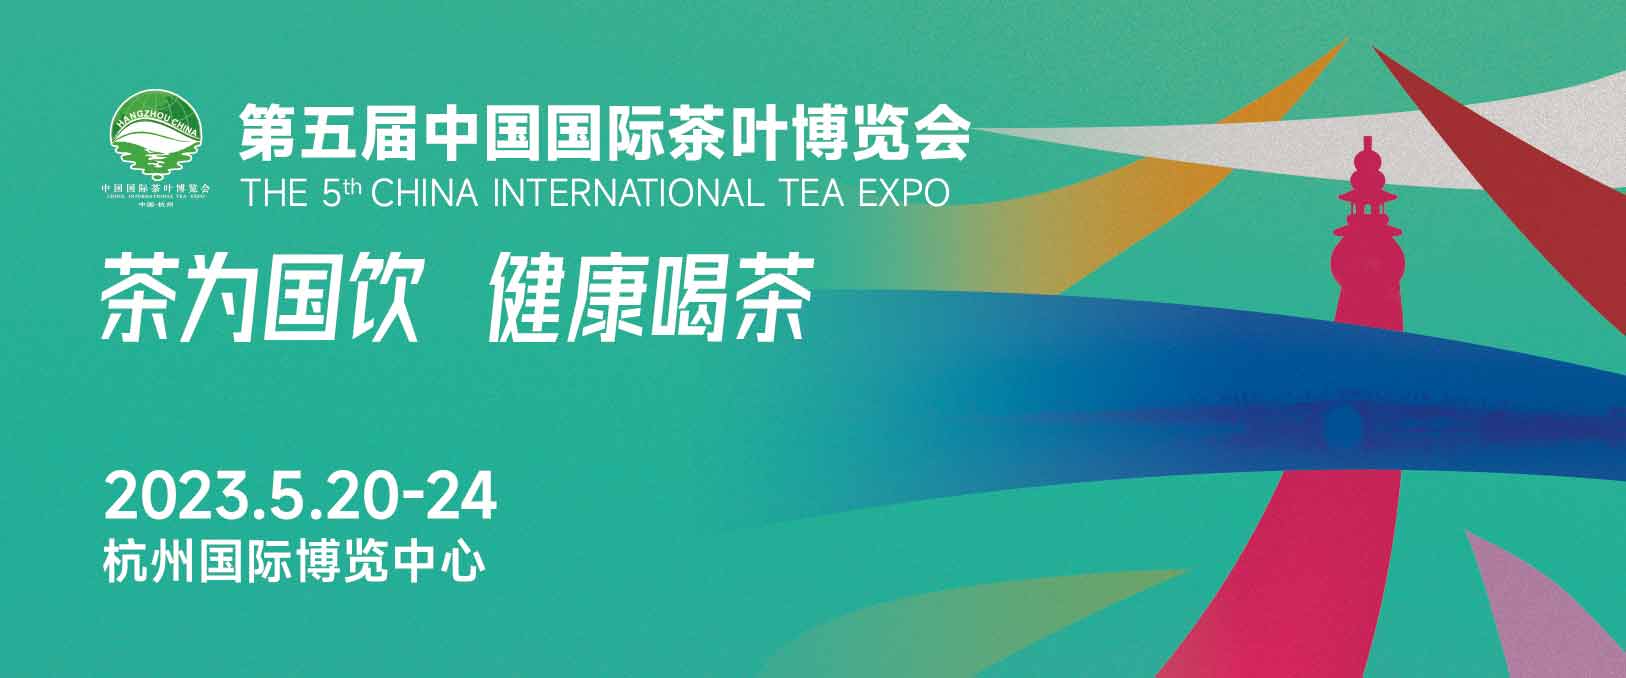 2023 La quinta exposición internacional de té de China